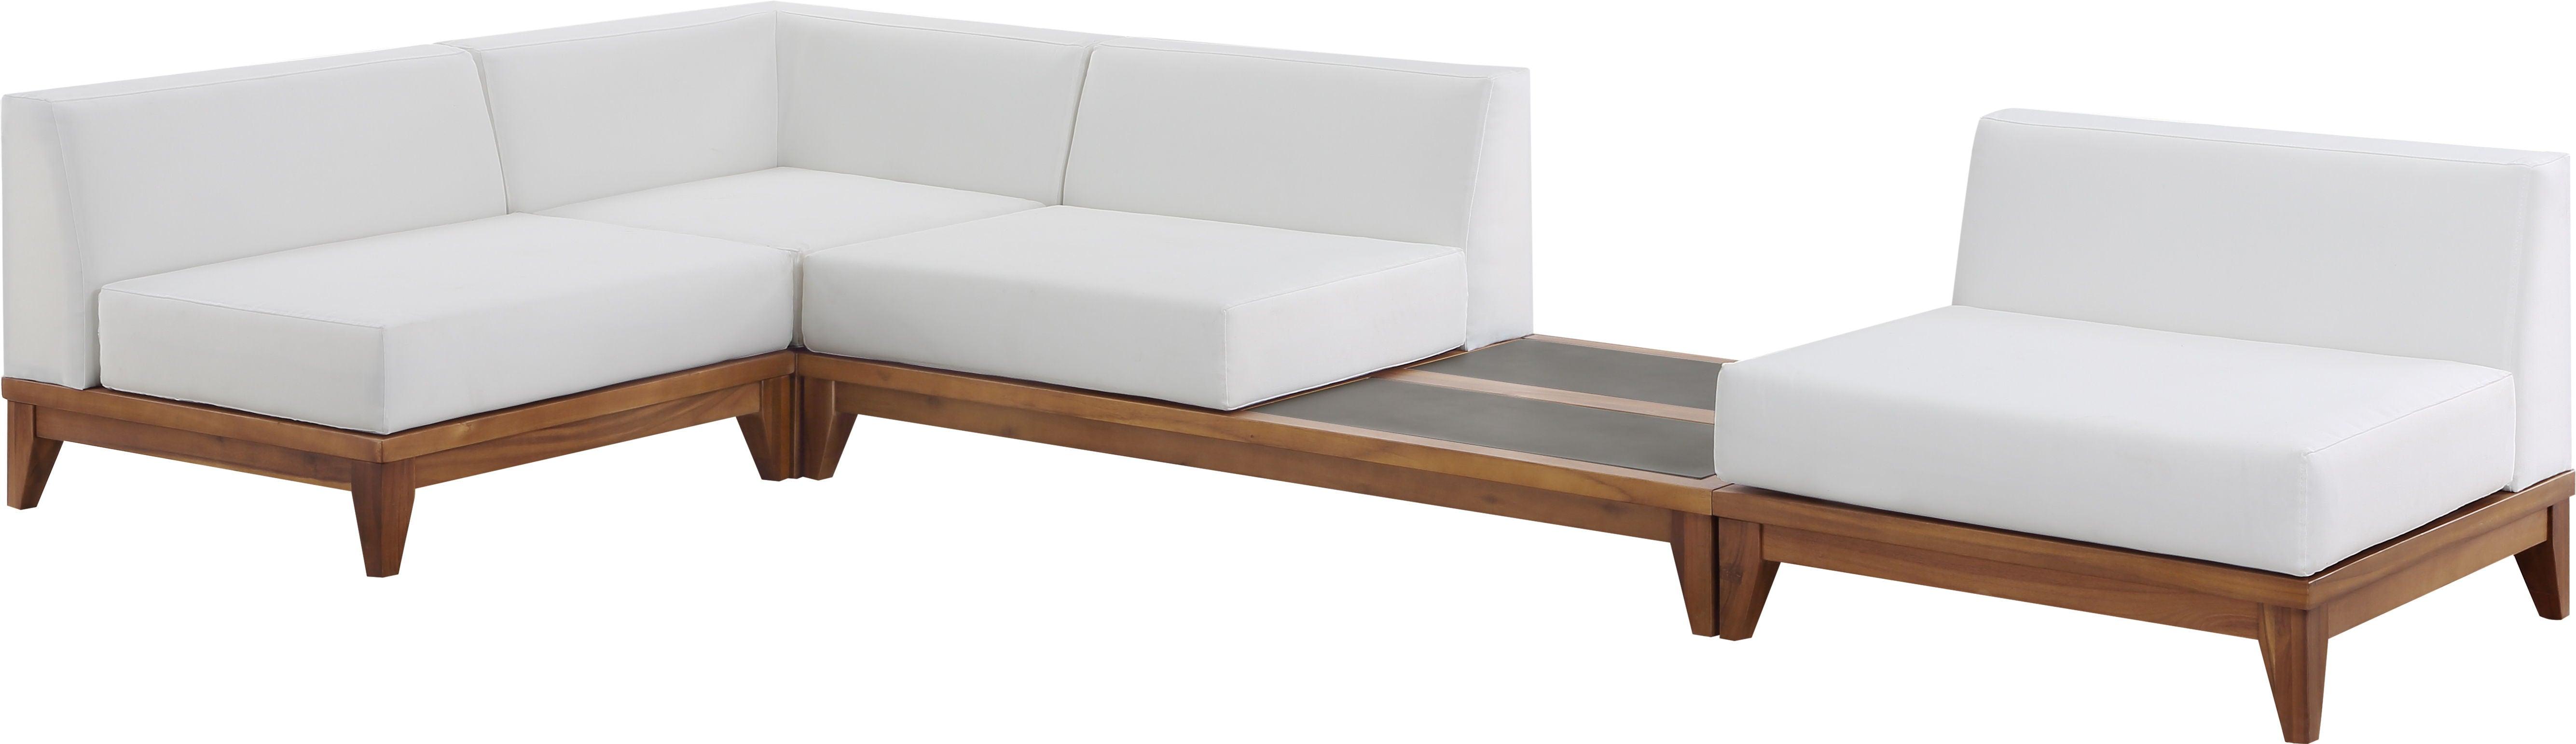 Meridian Furniture - Rio - Modular Sectional - Off White - 5th Avenue Furniture